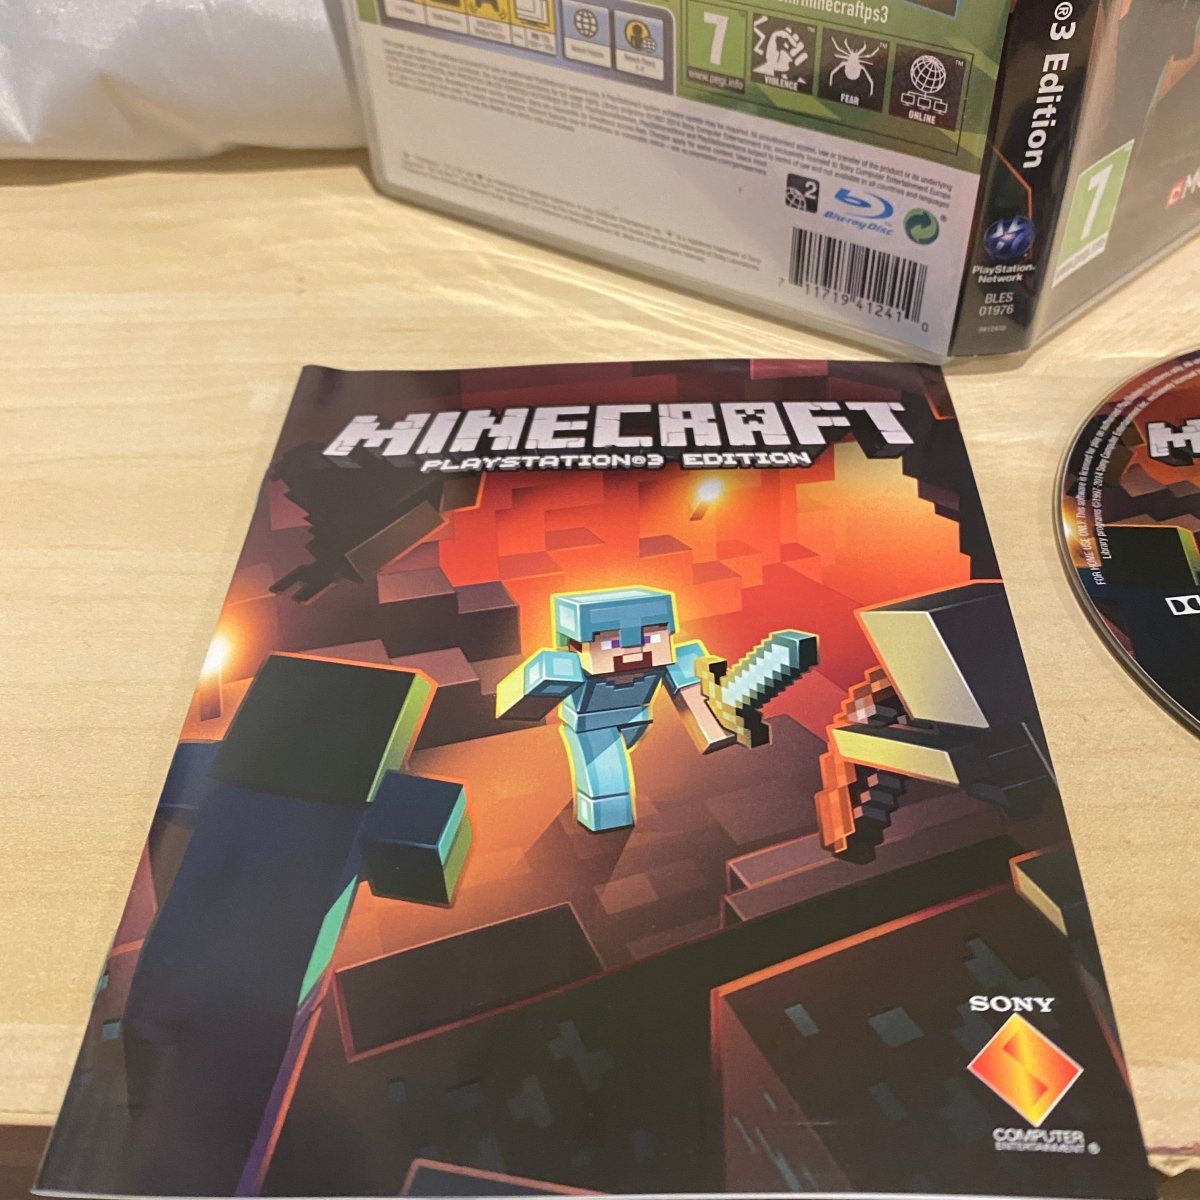 Minecraft ps3 edition